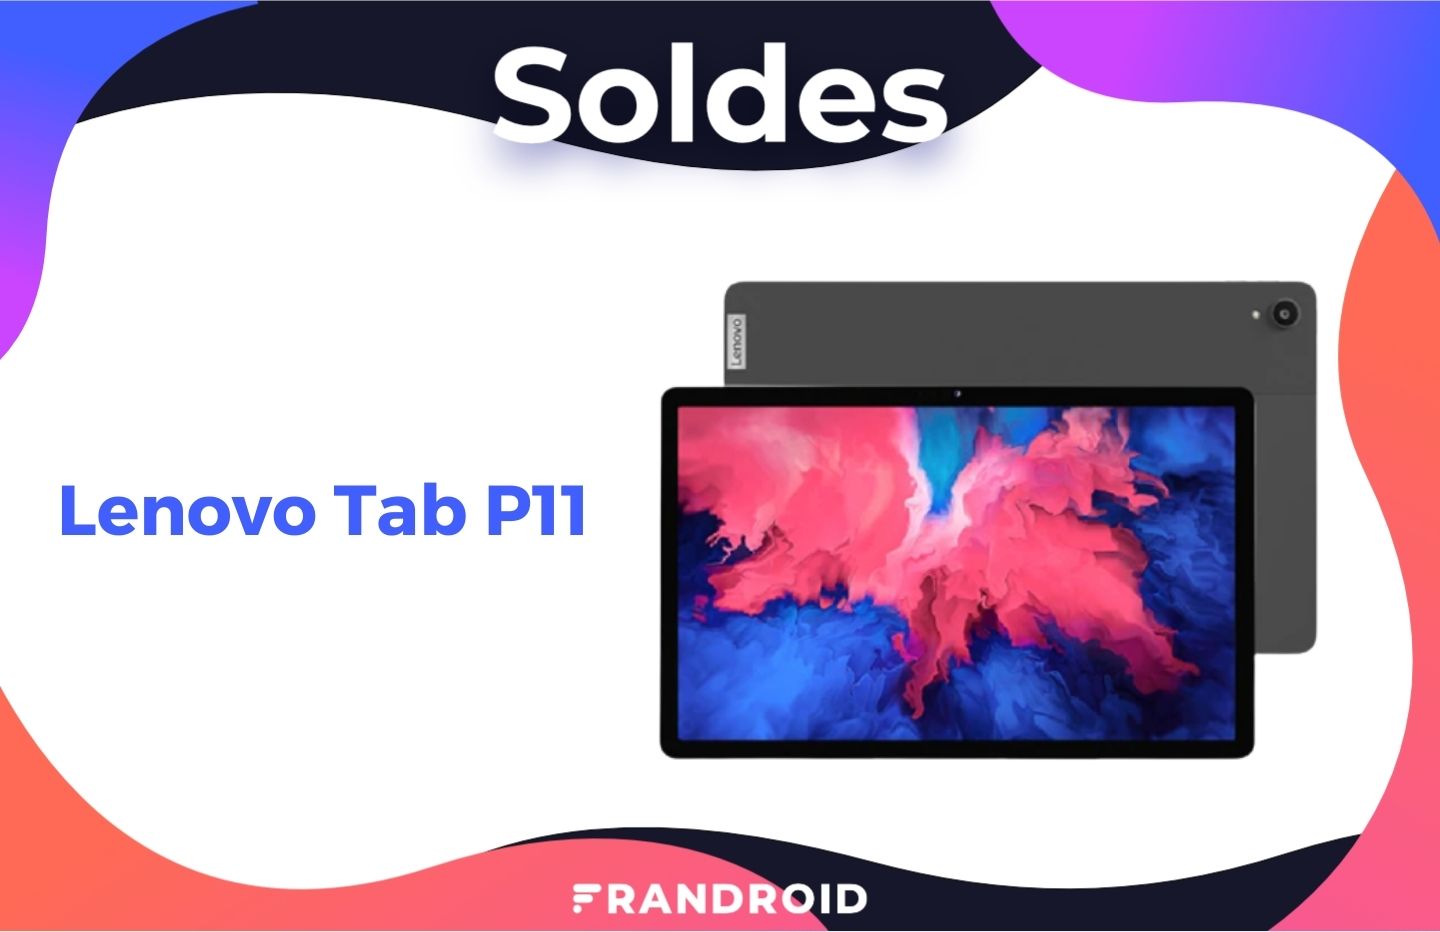 Yoga Tab 13 : la tablette grand format de Lenovo perd 300 € durant